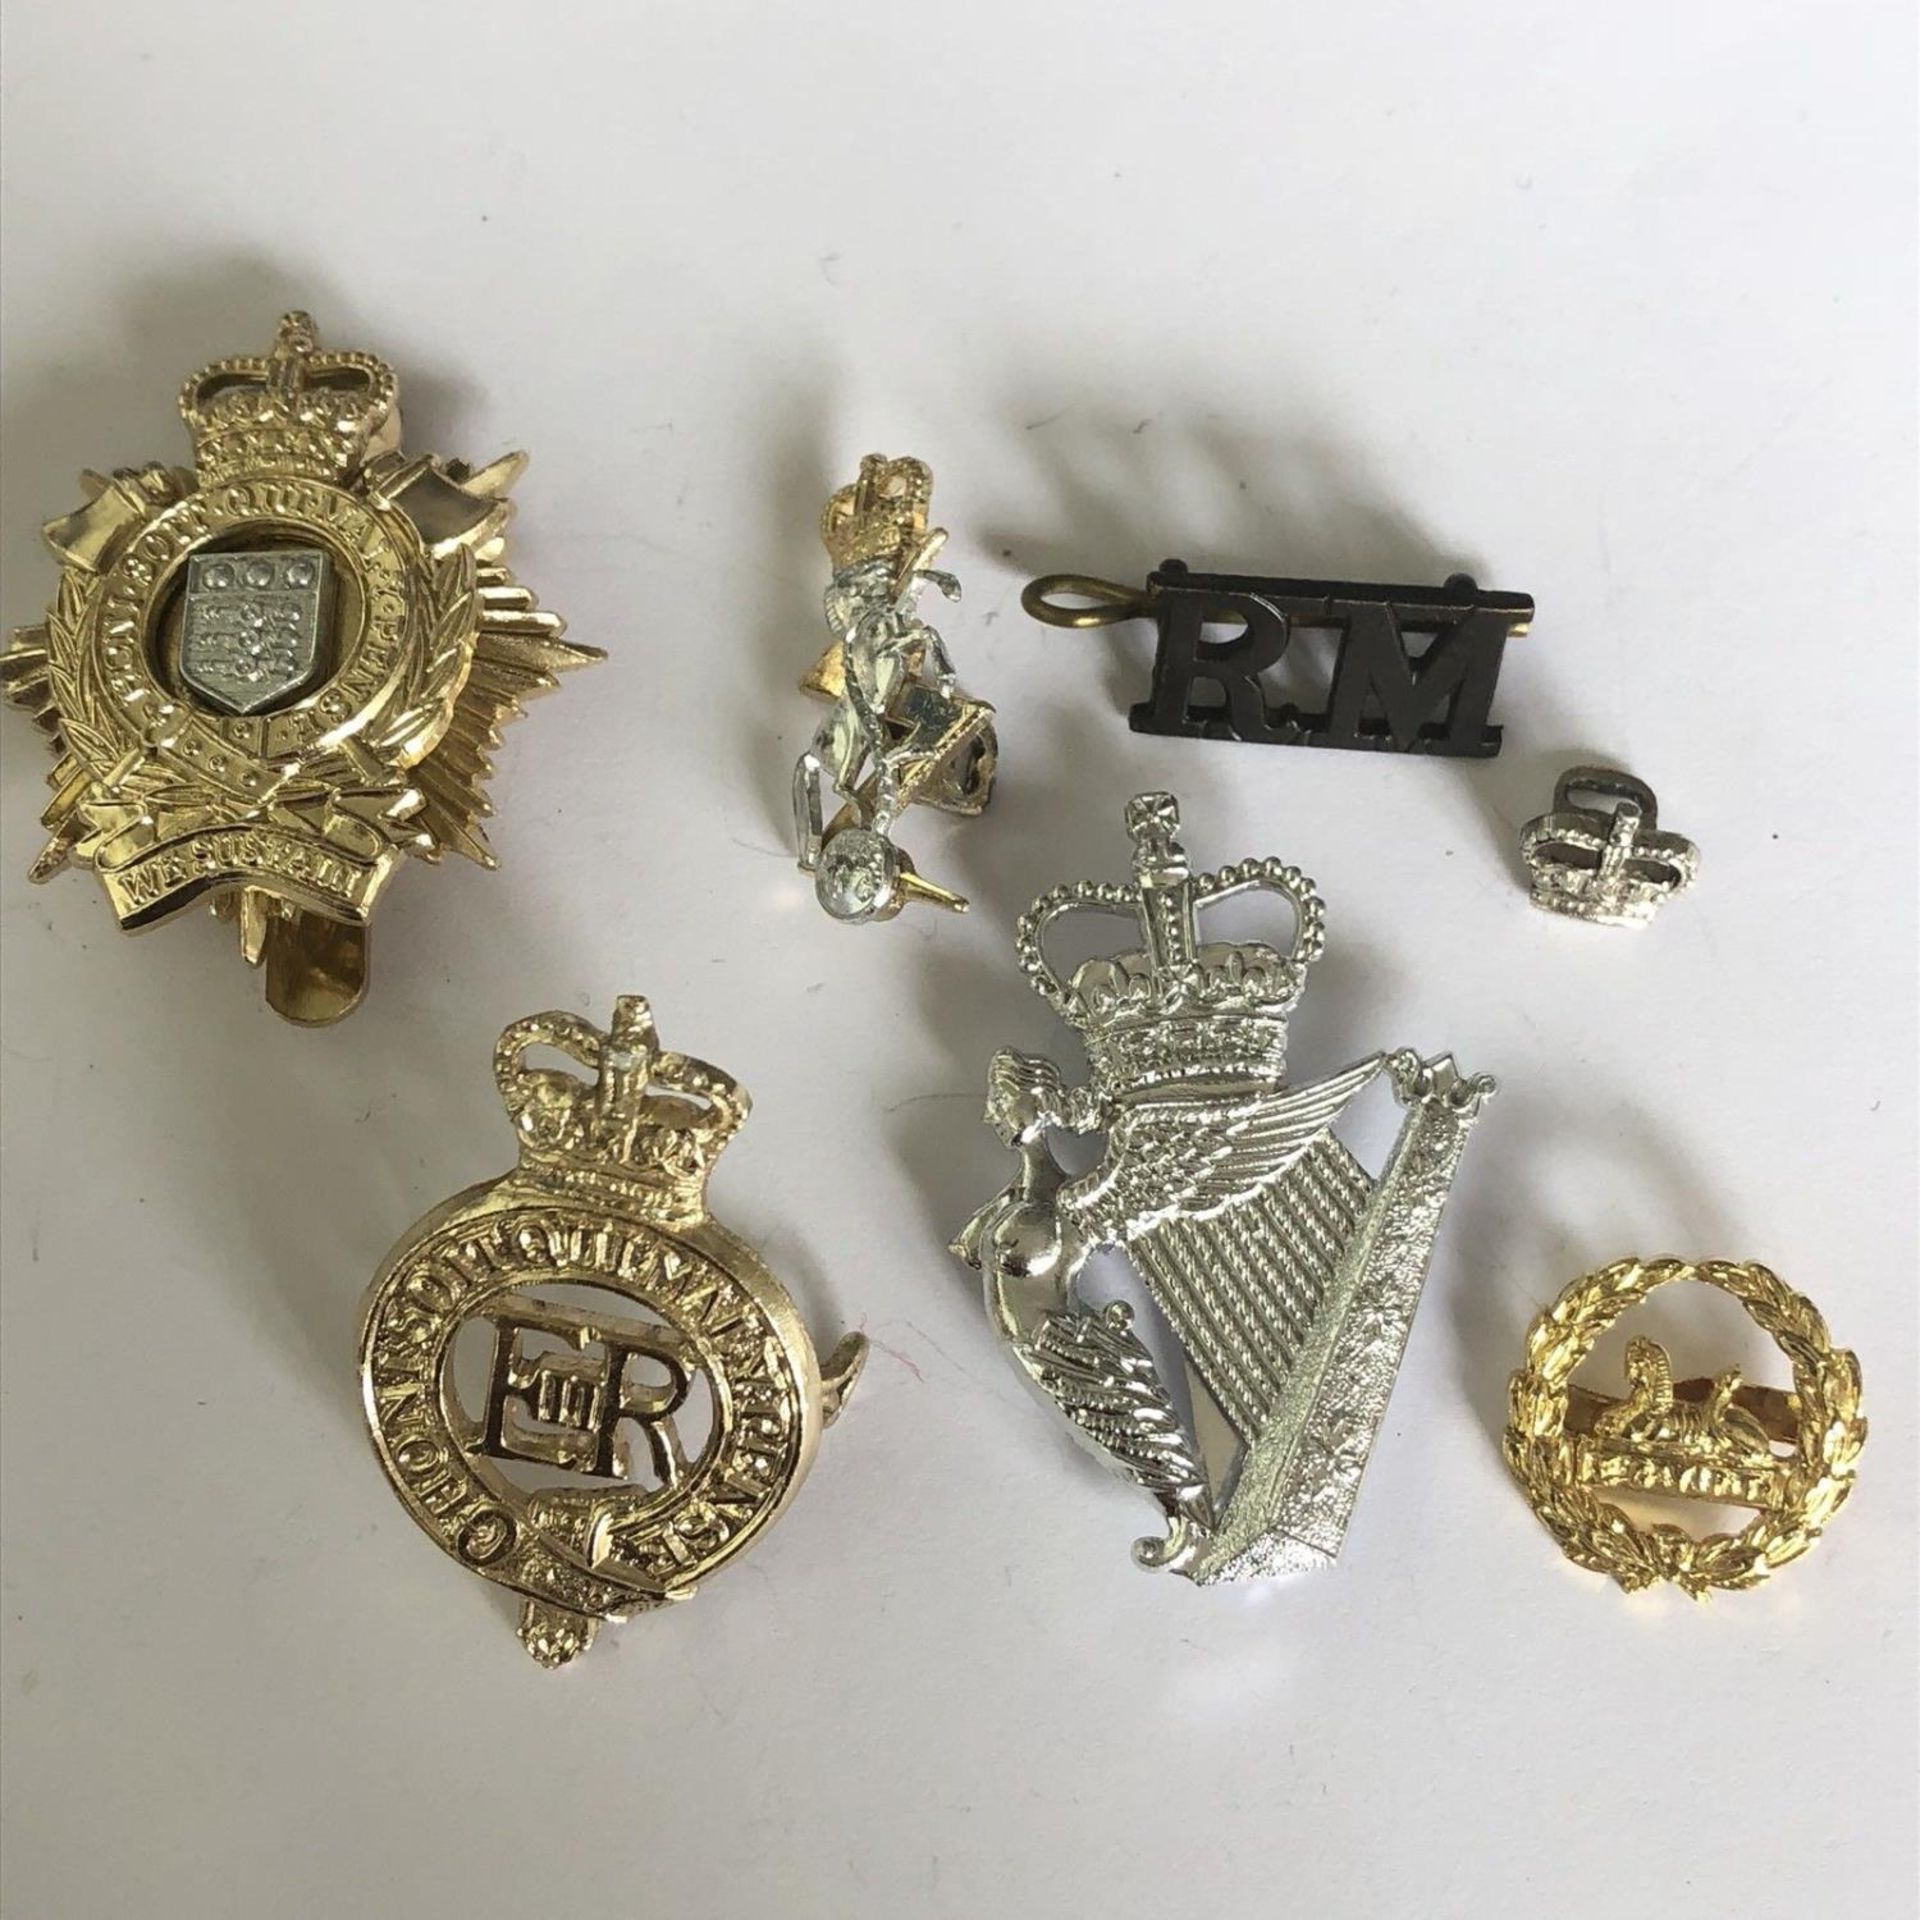 Group of 7 British military cap badges